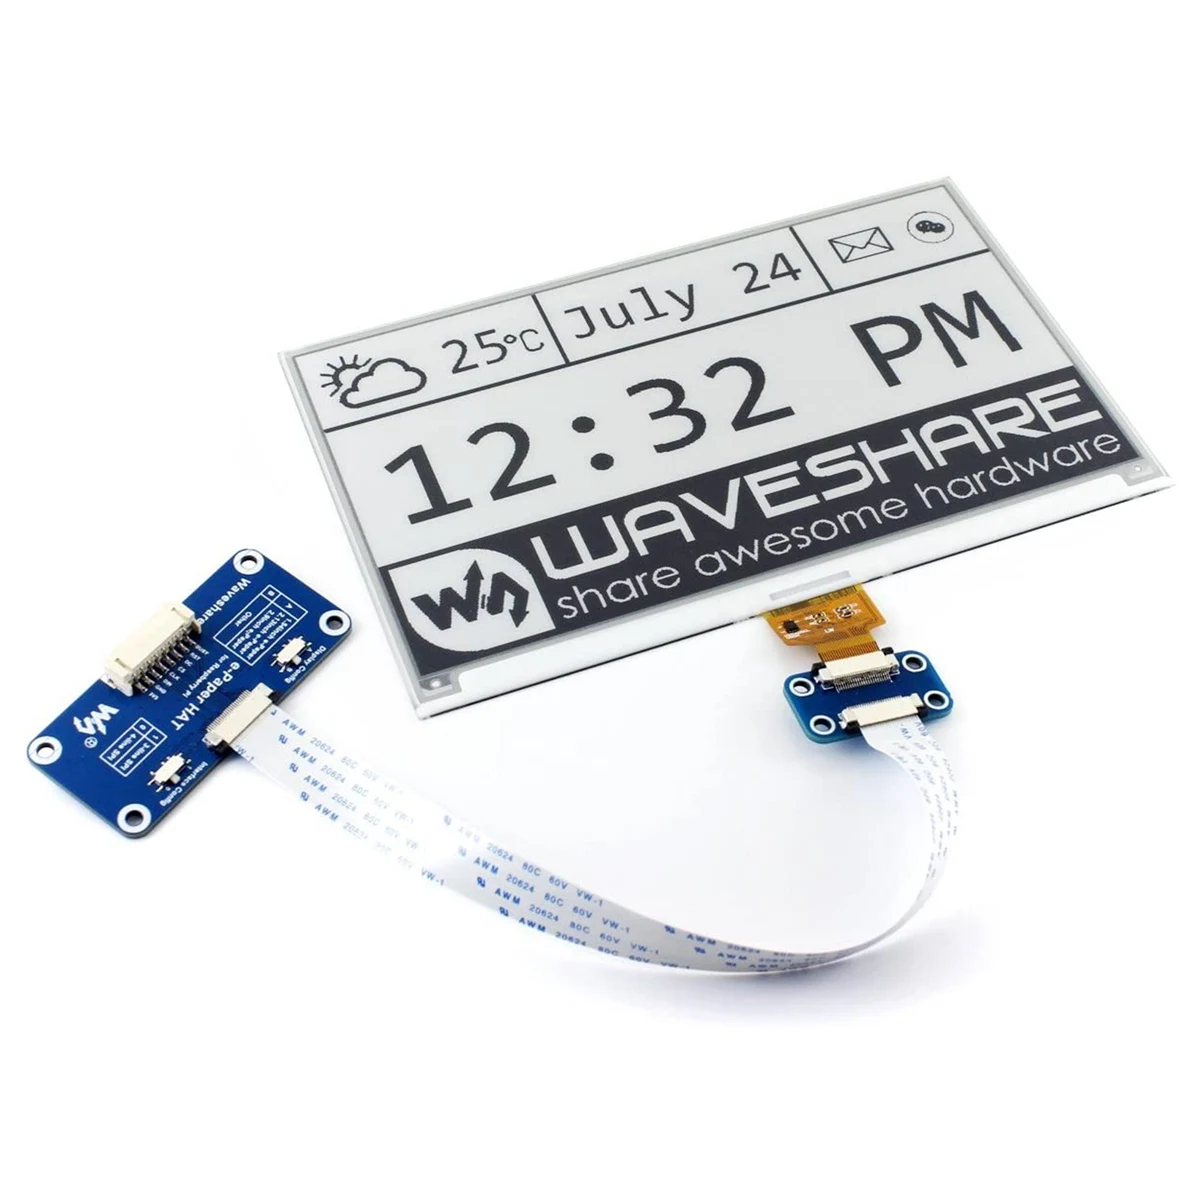 

Электронная бумага Waveshare 7,5 дюйма, Eink, E Ink, экран дисплея, монитор, комплект для начинающих для Arduino RPI Raspberry Pi Zero 2 Вт WH 2 Вт 3B Plus